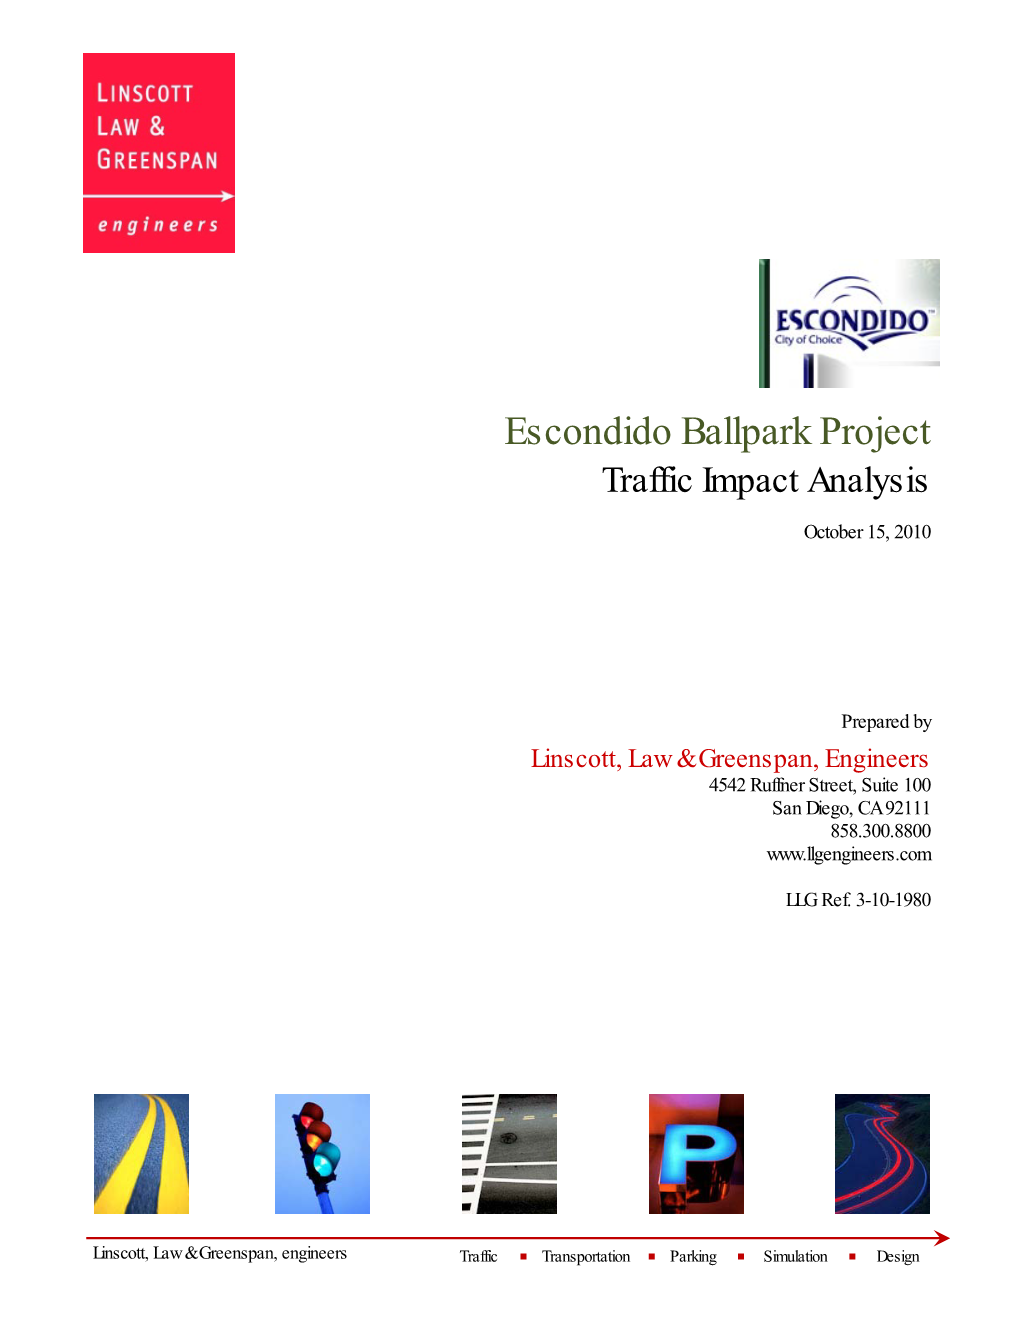 Escondido Ballpark Project Traffic Impact Analysis